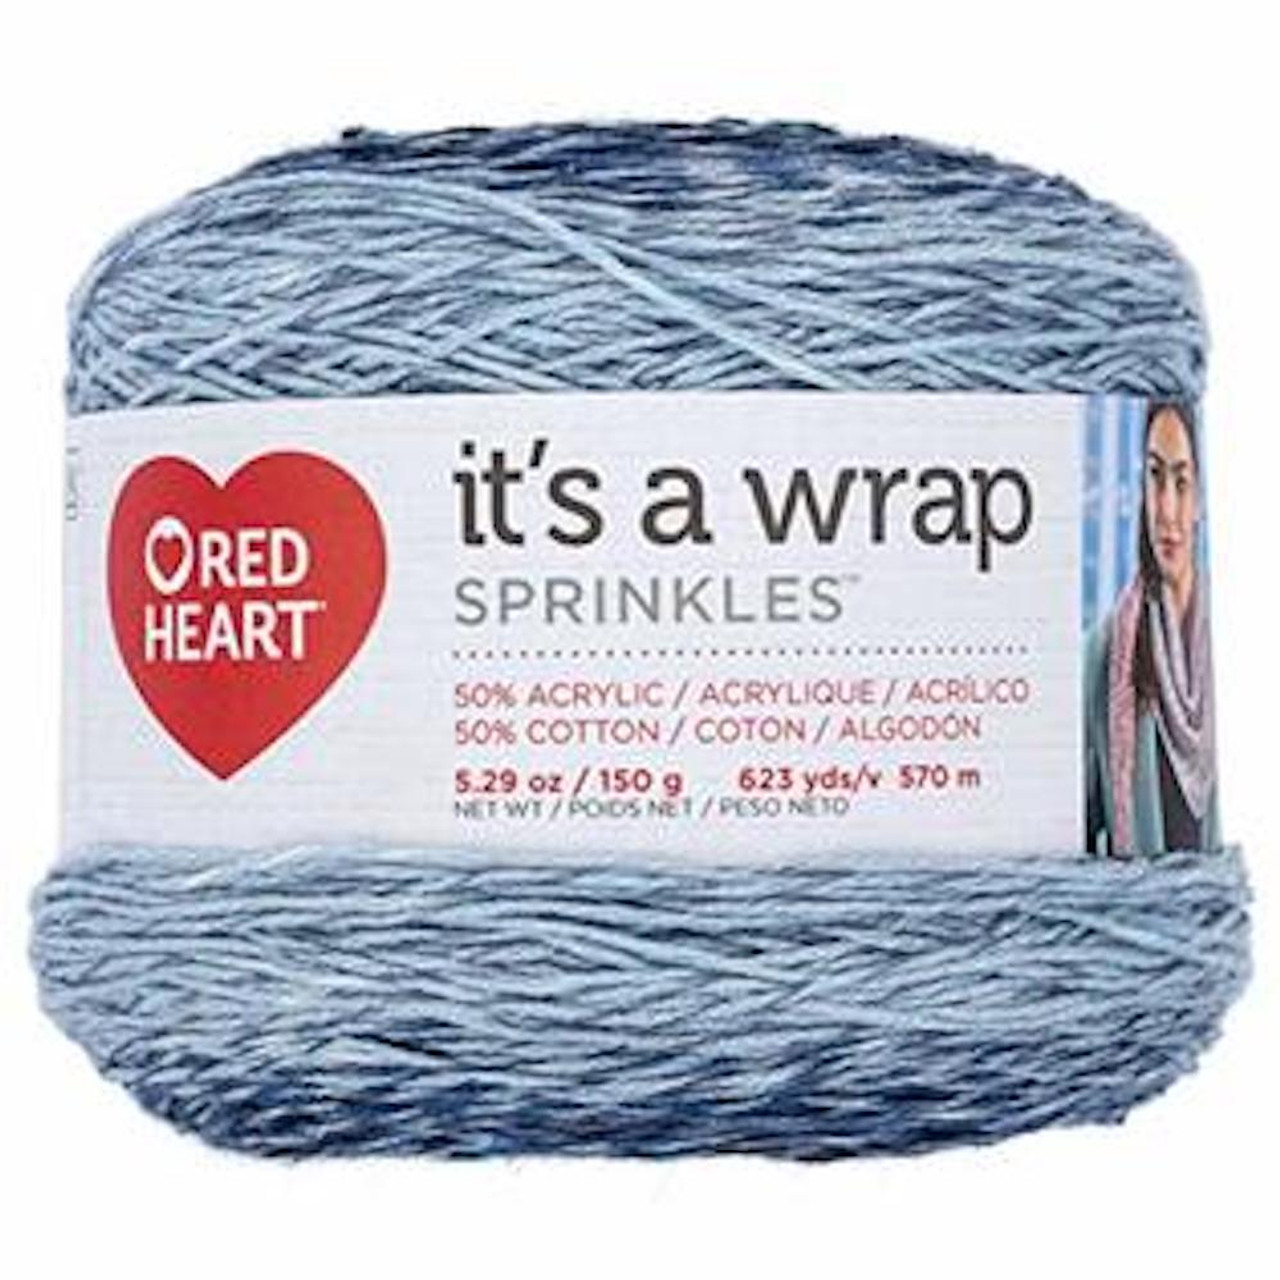 Red Heart It's A Wrap Sprinkles French Macaron Knitting & Crochet Yarn